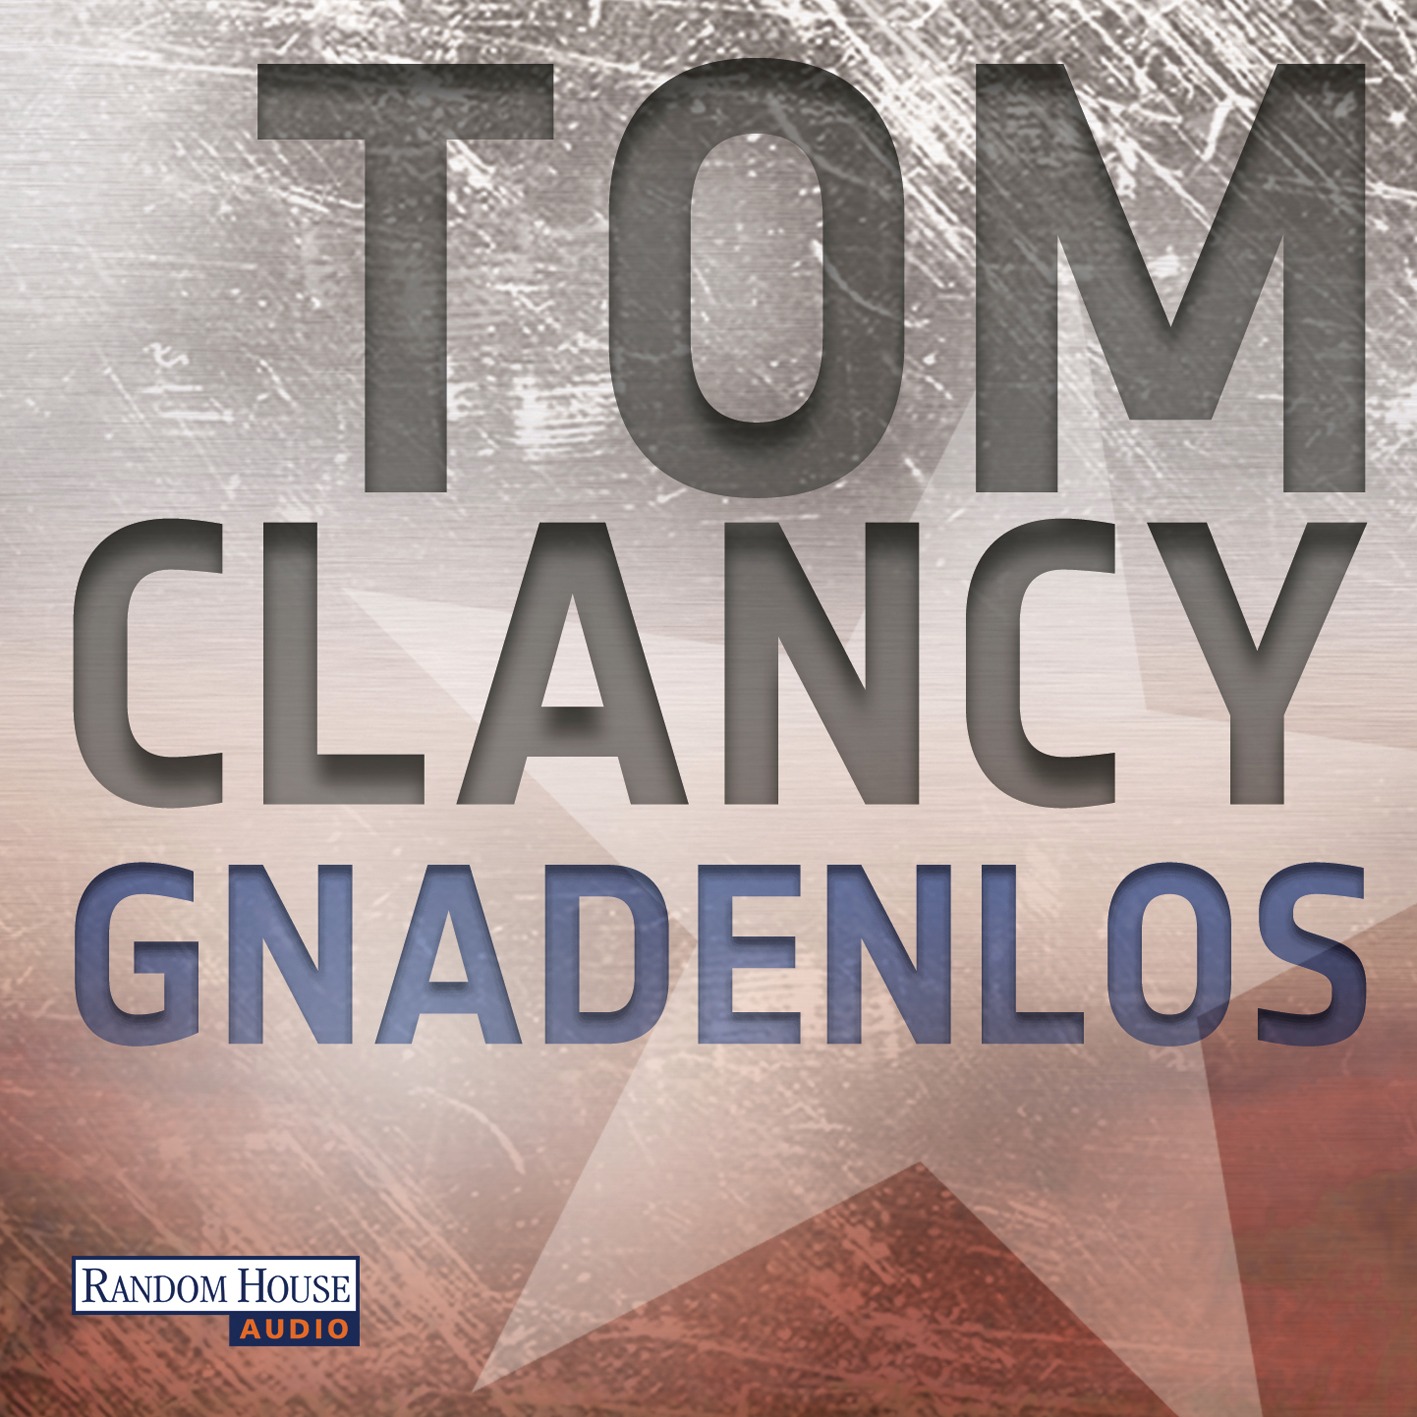 tom clancy epub free download